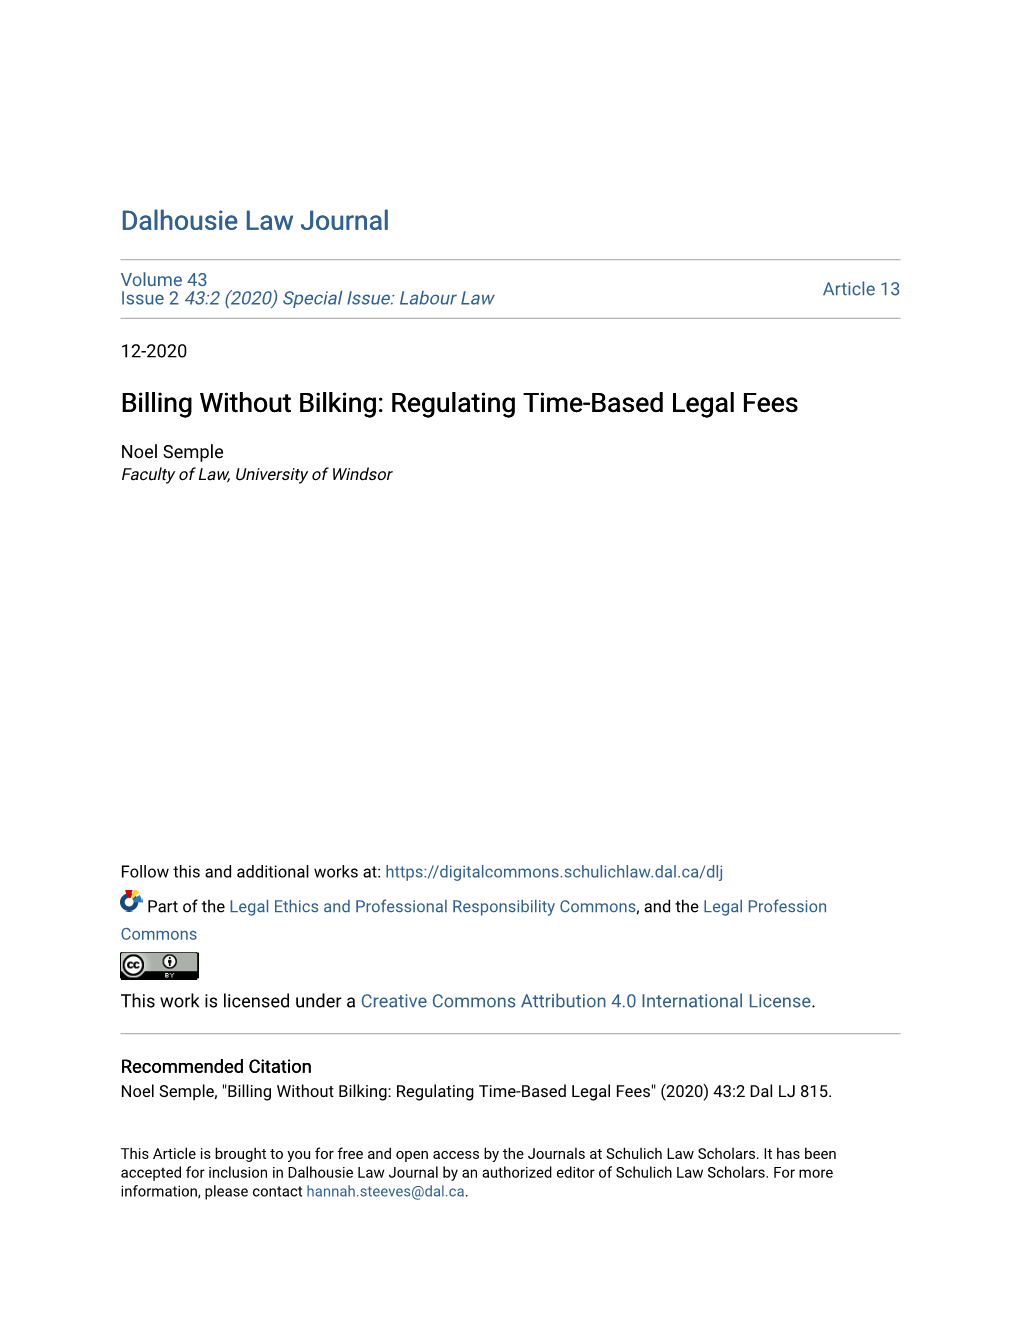 Regulating Time-Based Legal Fees